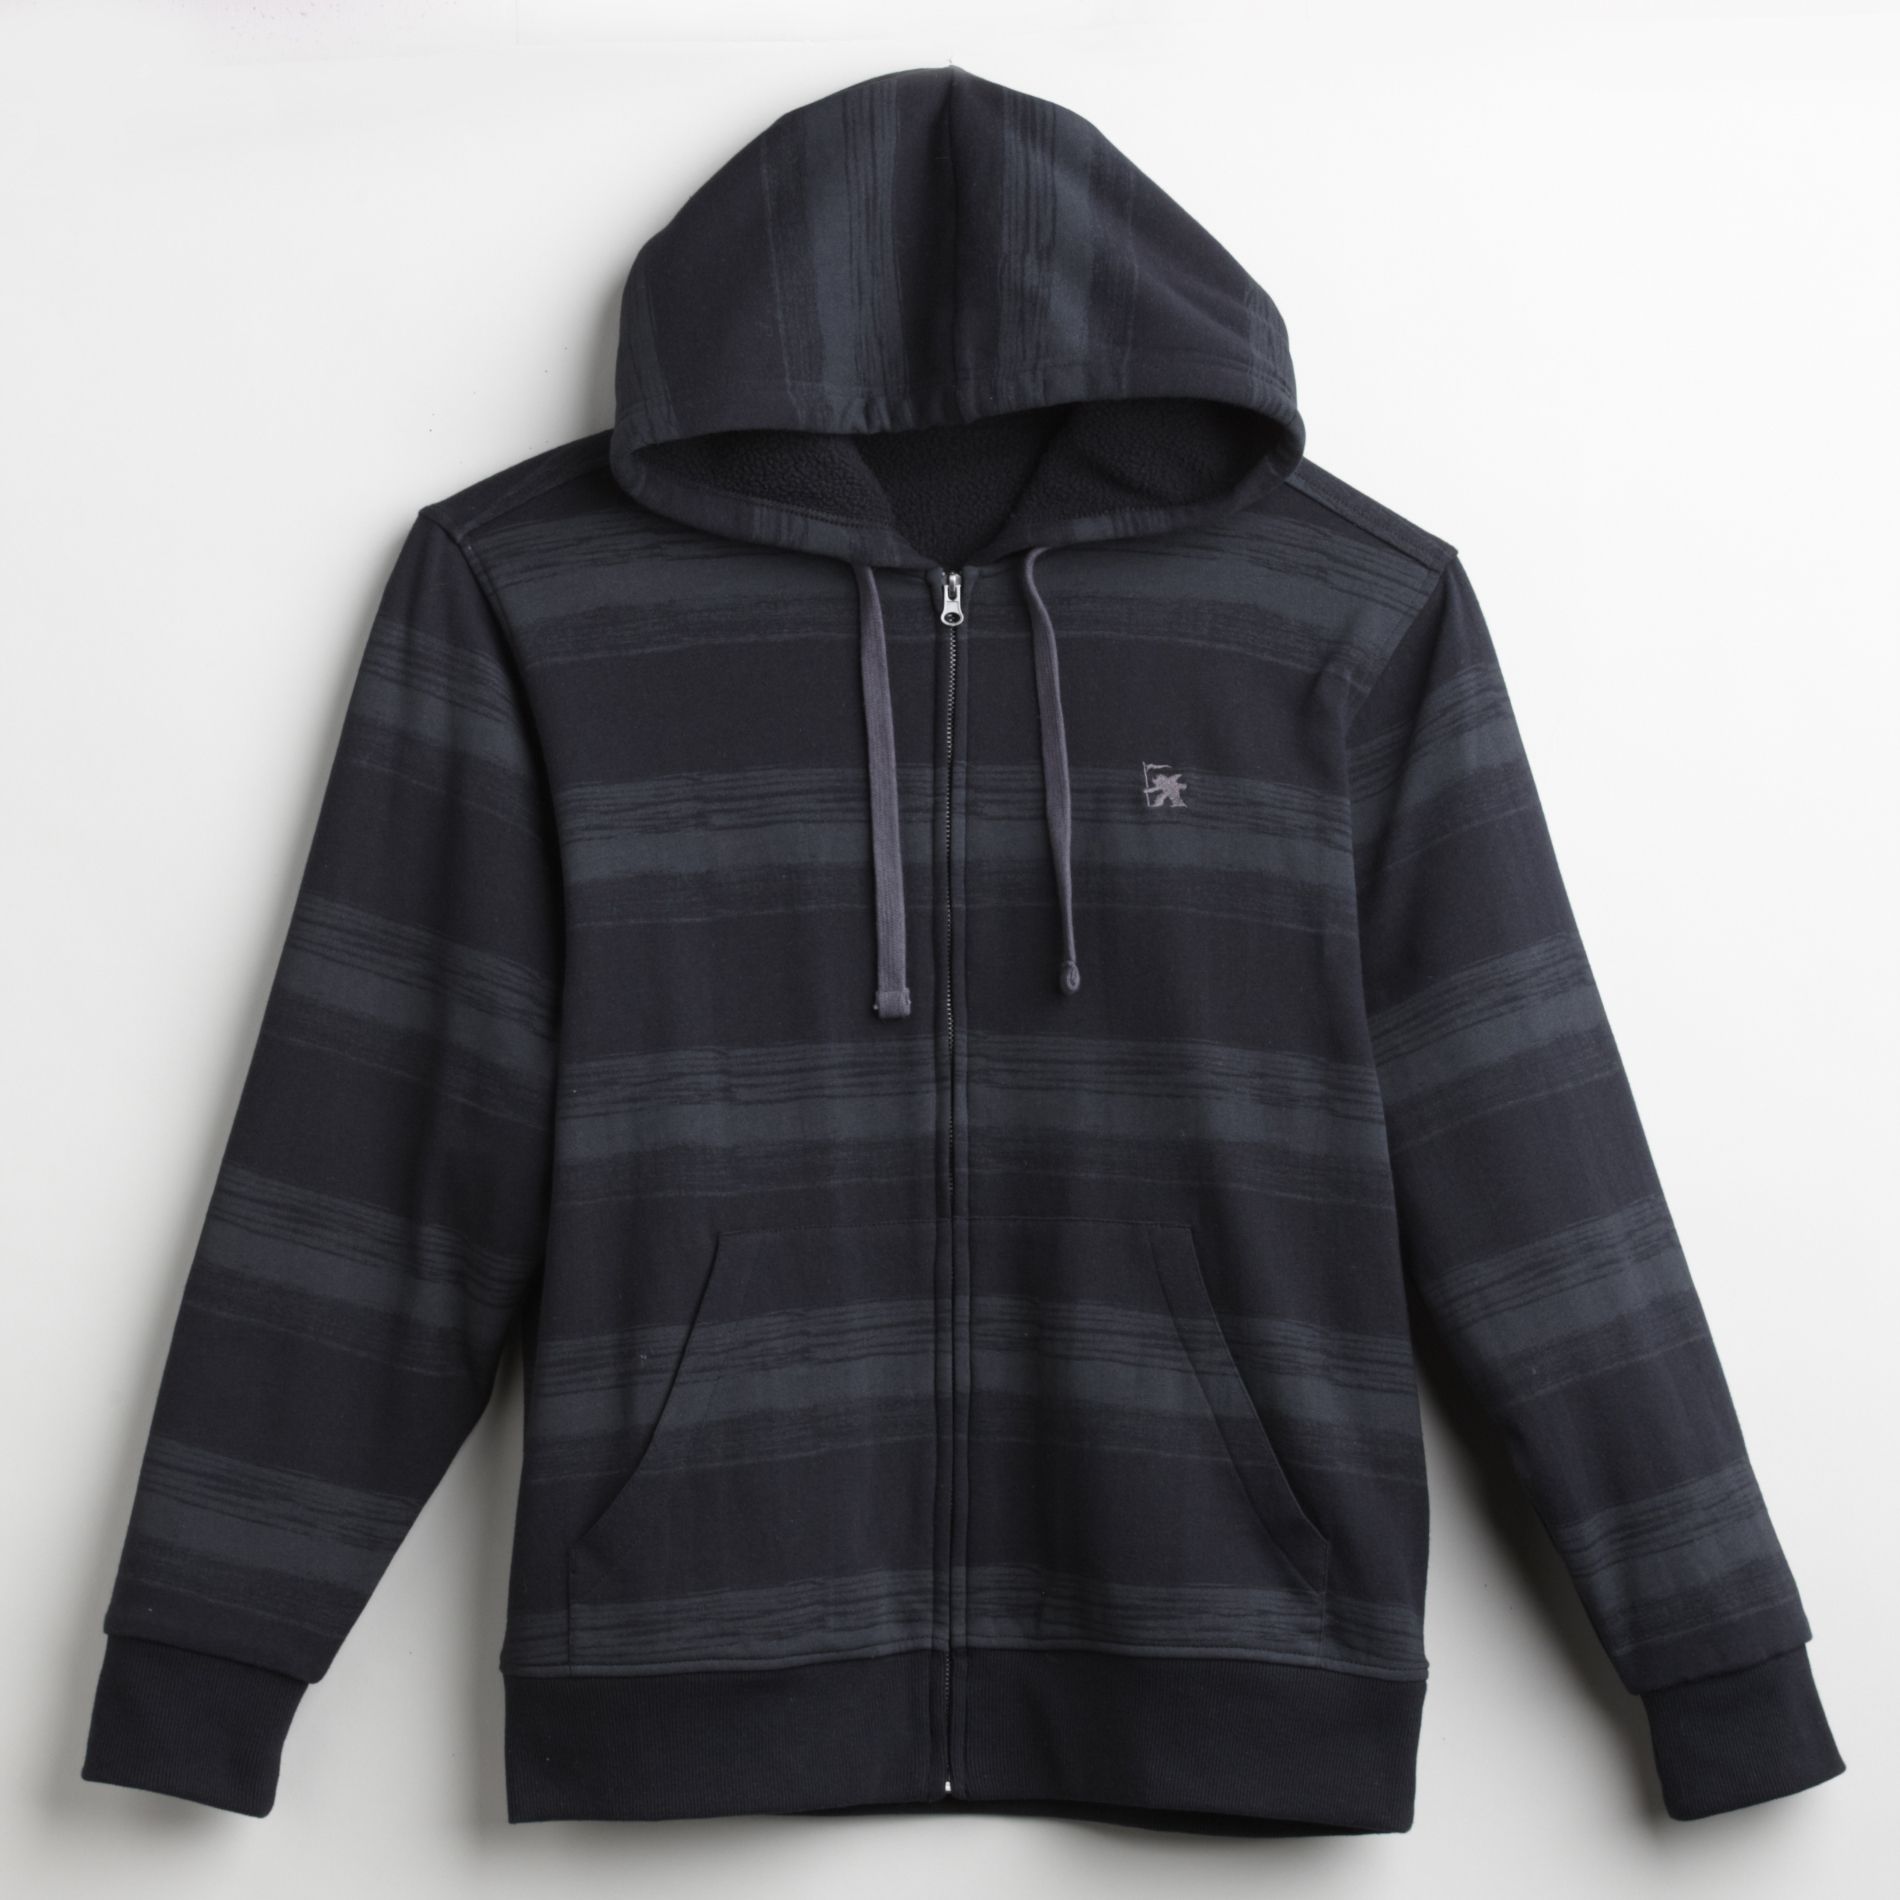 Gotcha Men's Hooded Sweatshirt Jacket with Faux-Sherpa Lining